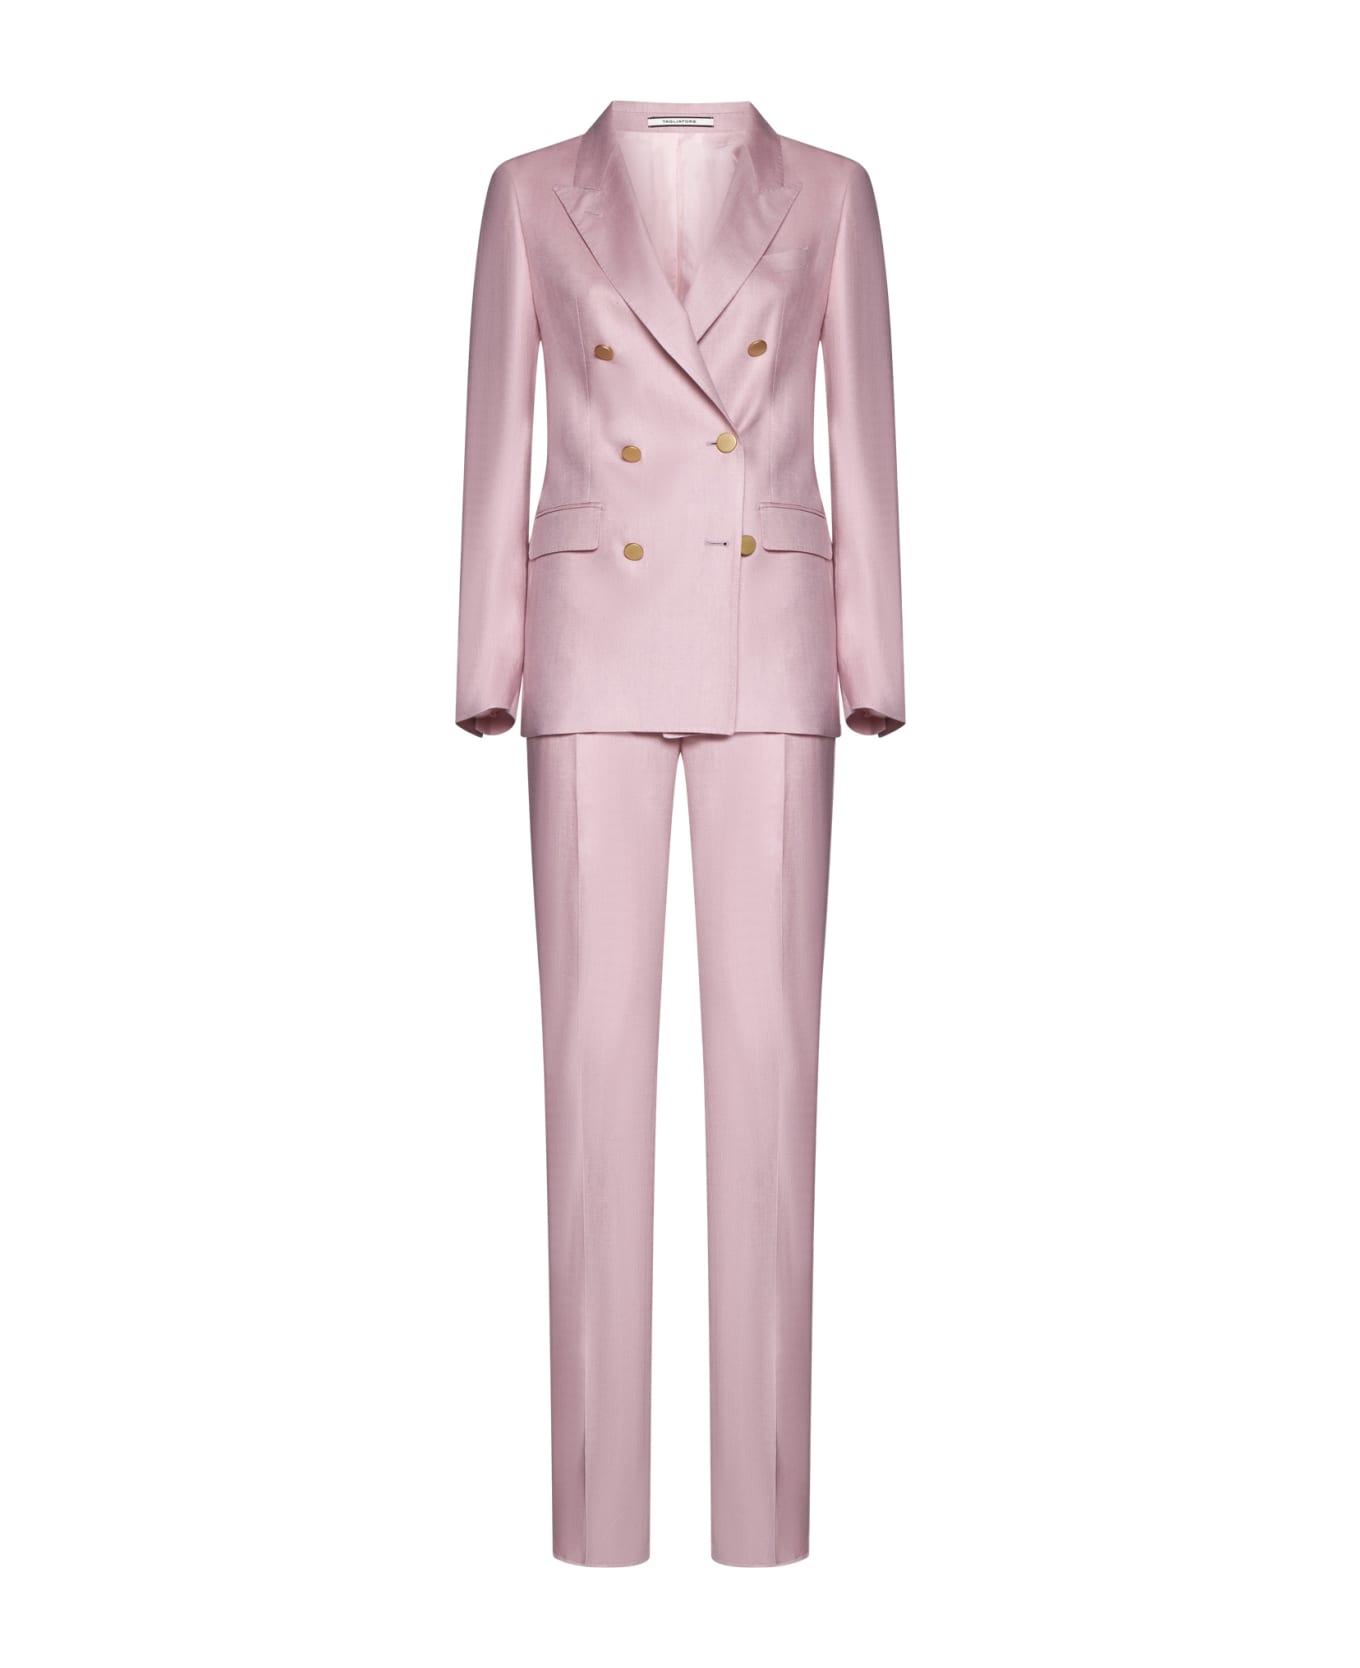 Tagliatore Parigi Double-breasted Linen Suit - Rosa スーツ